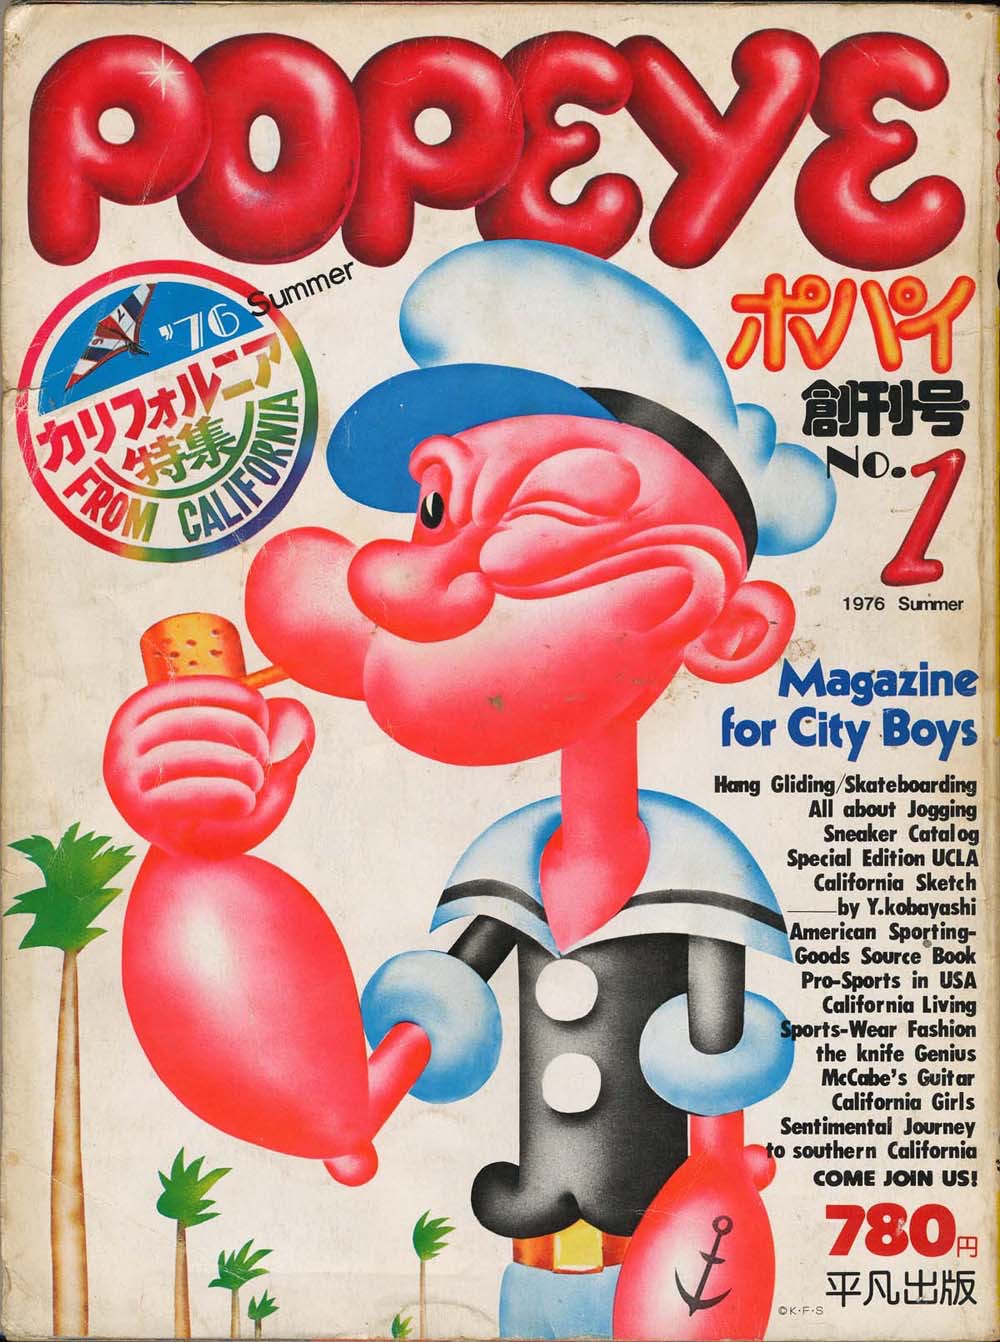 Popeye Issue 1